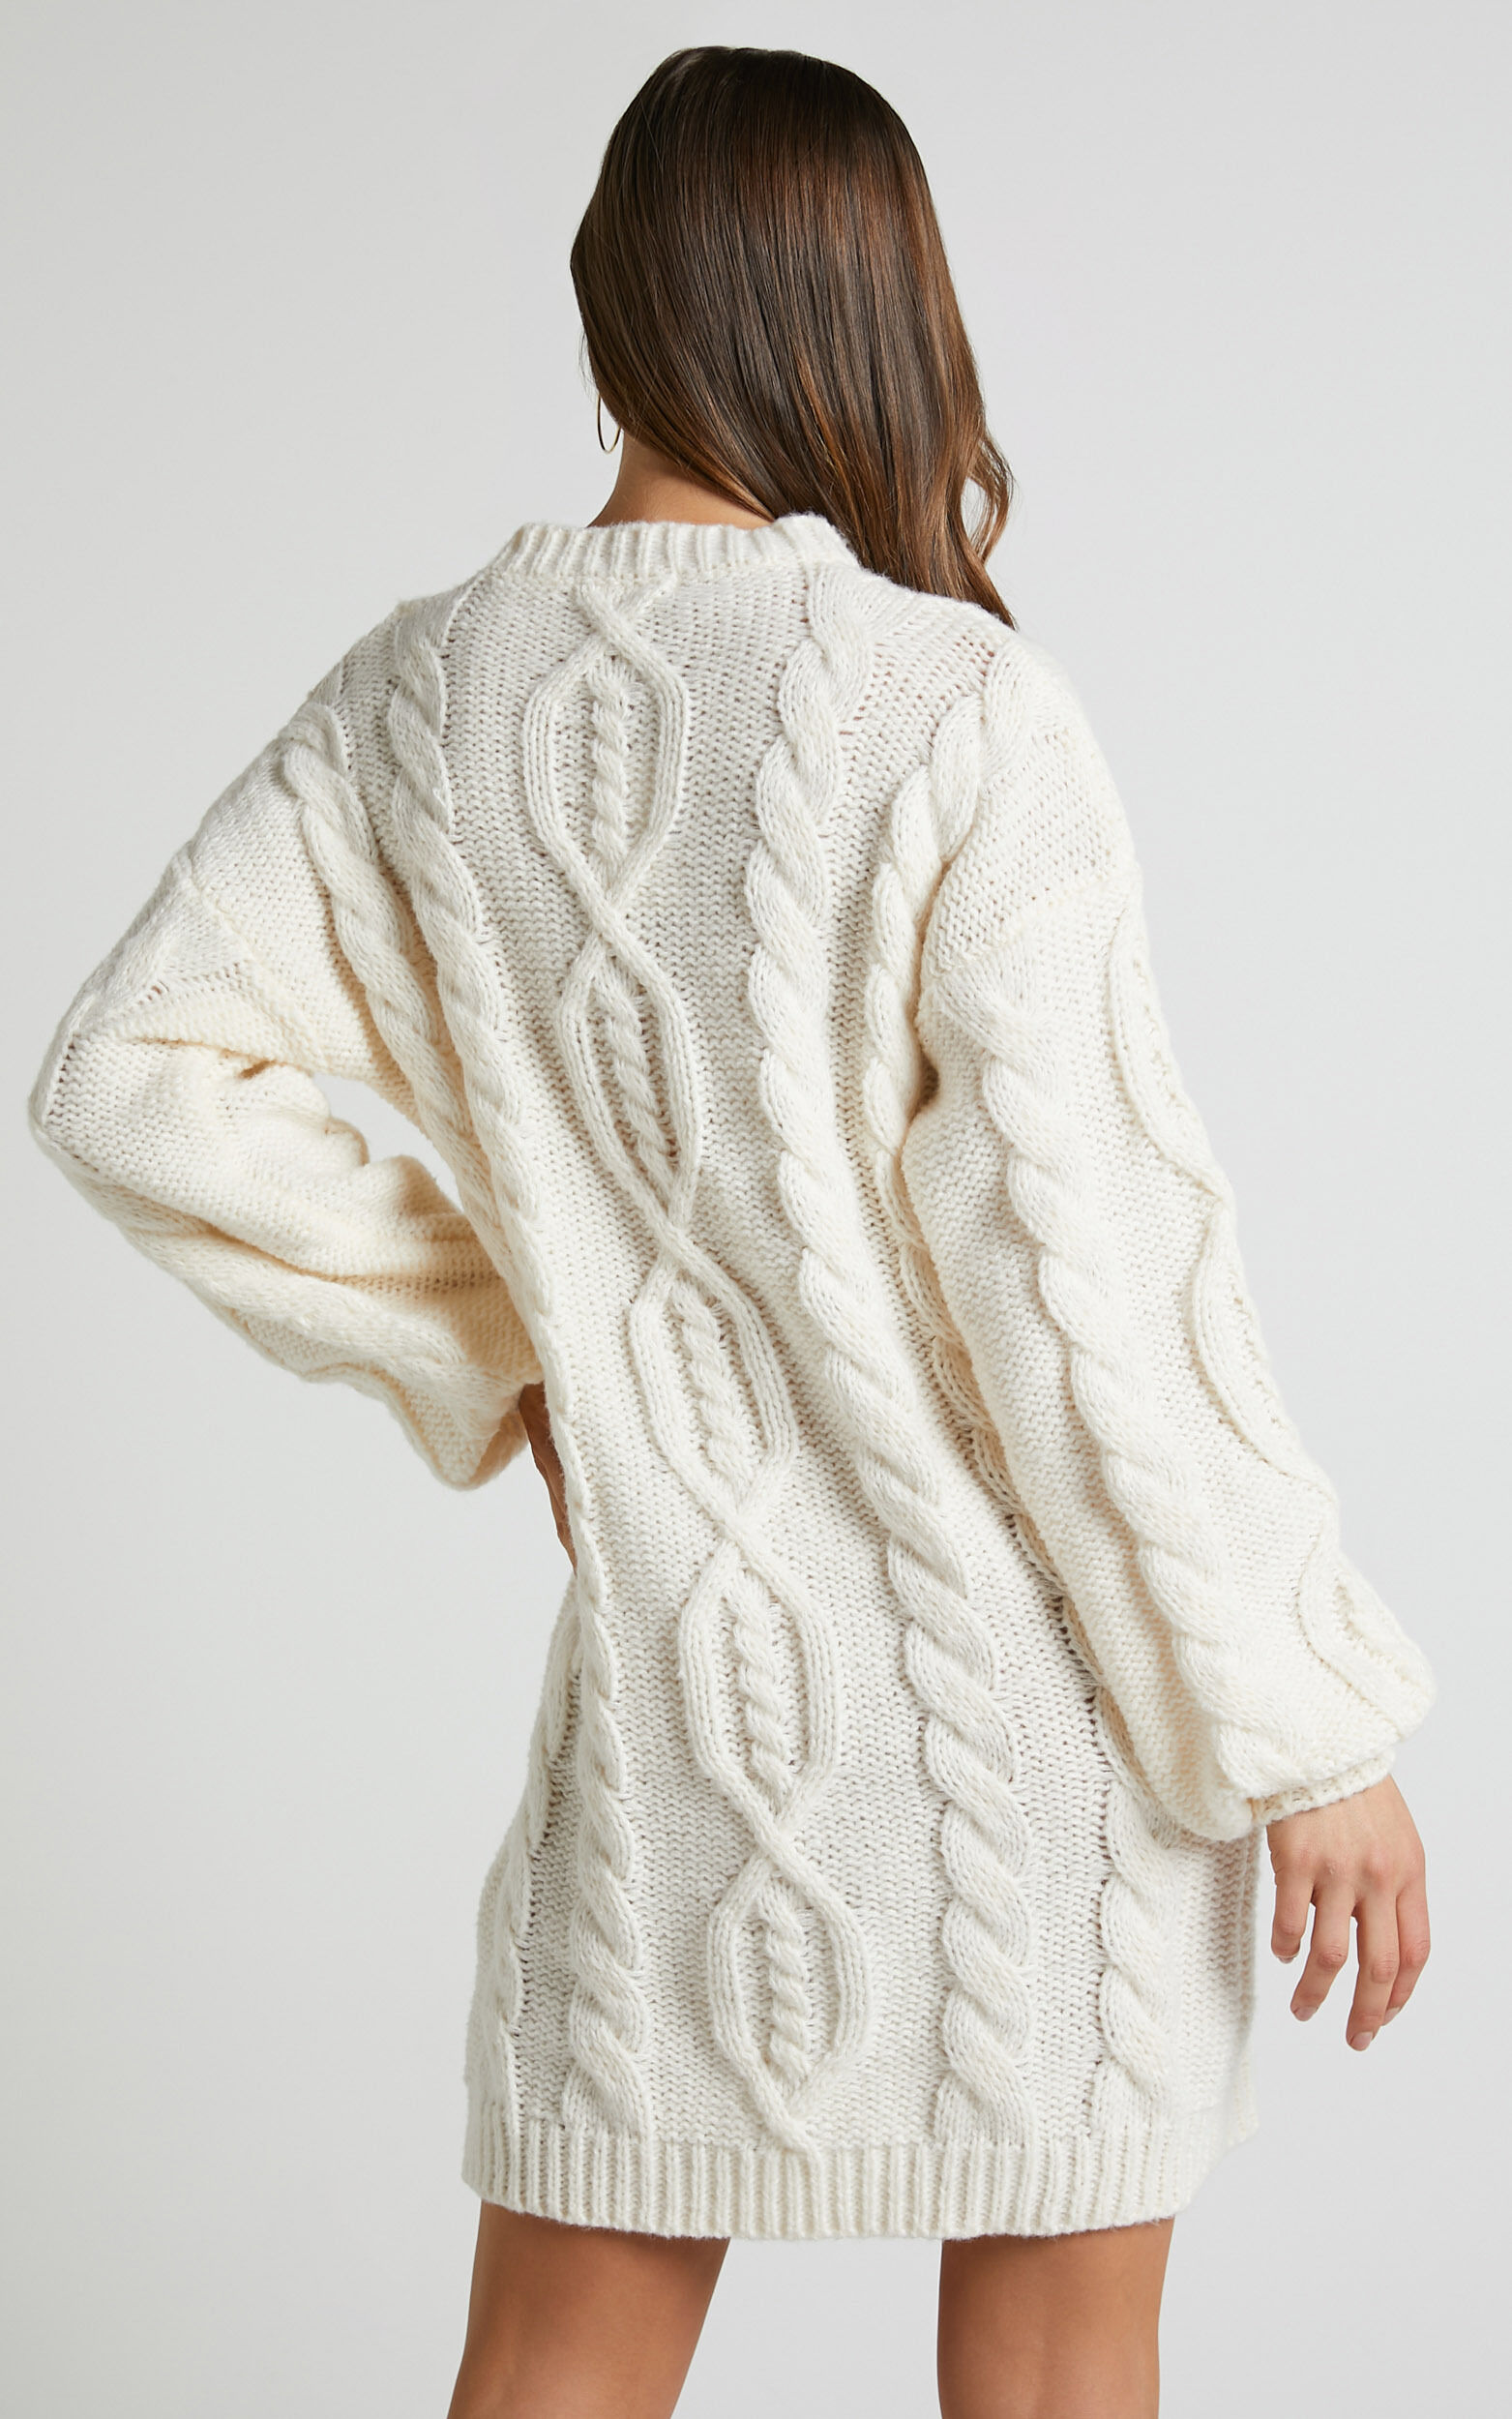 Deliah Mini Dress - Cable Knit Sweater Dress in Cream